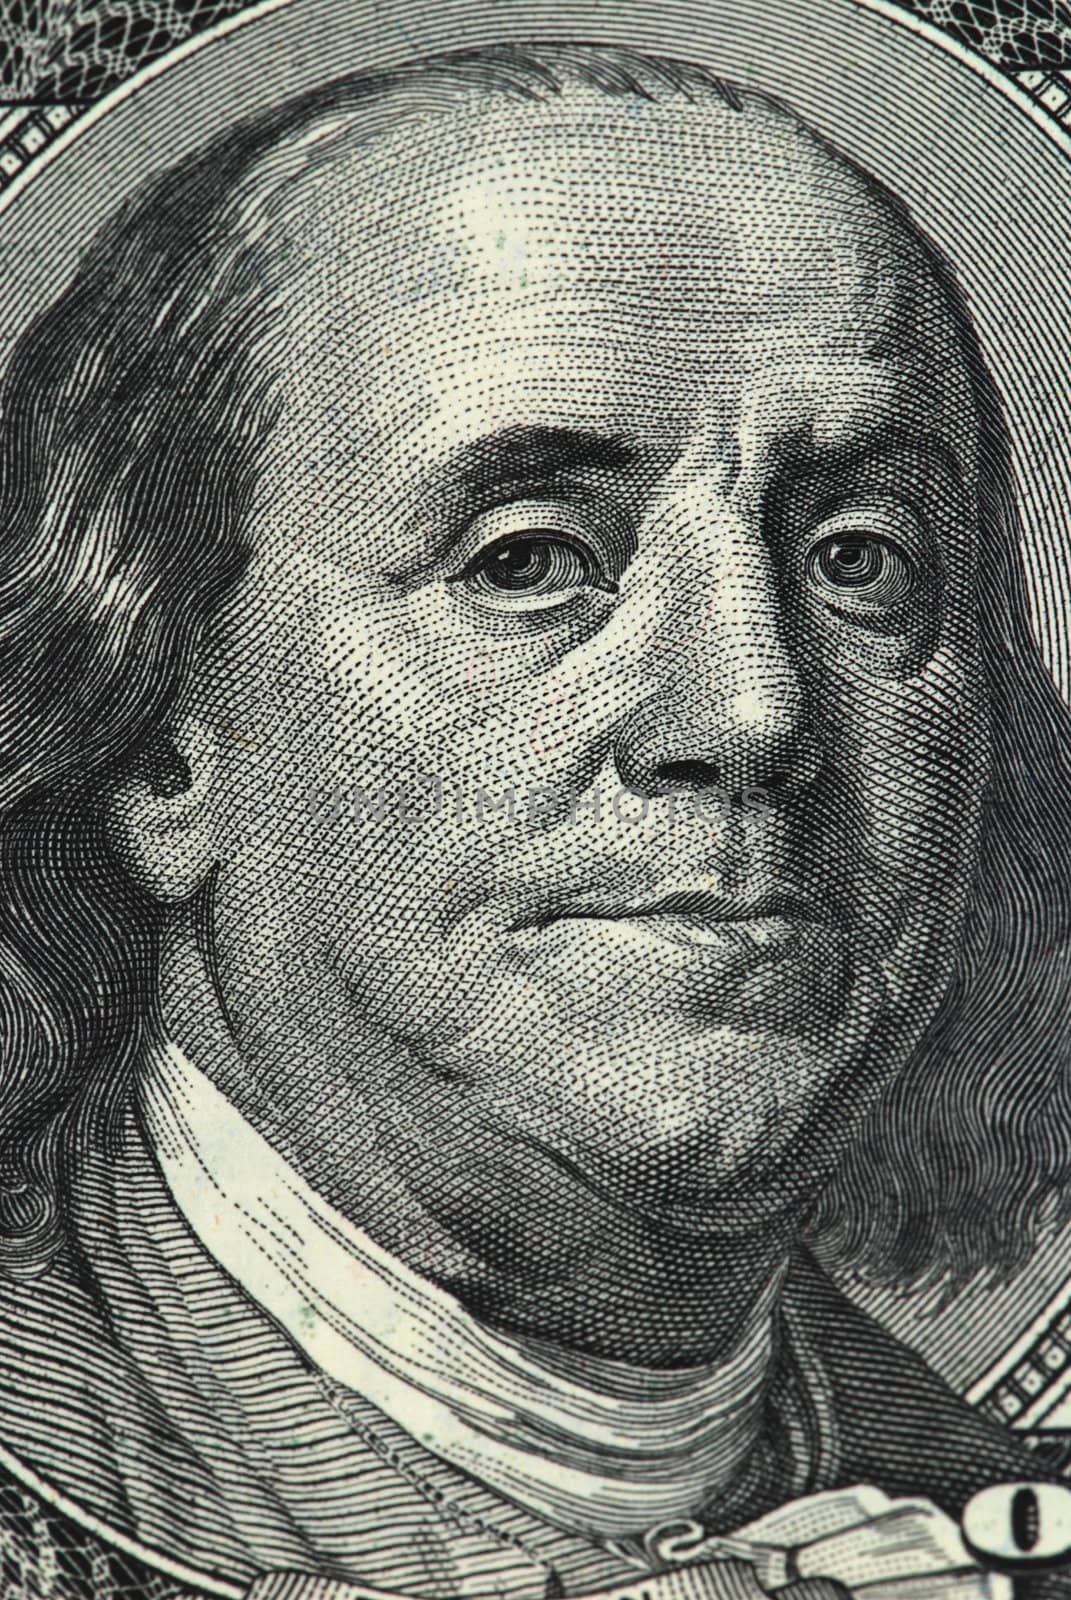 Franklin portrait from a twenty dollar banknote